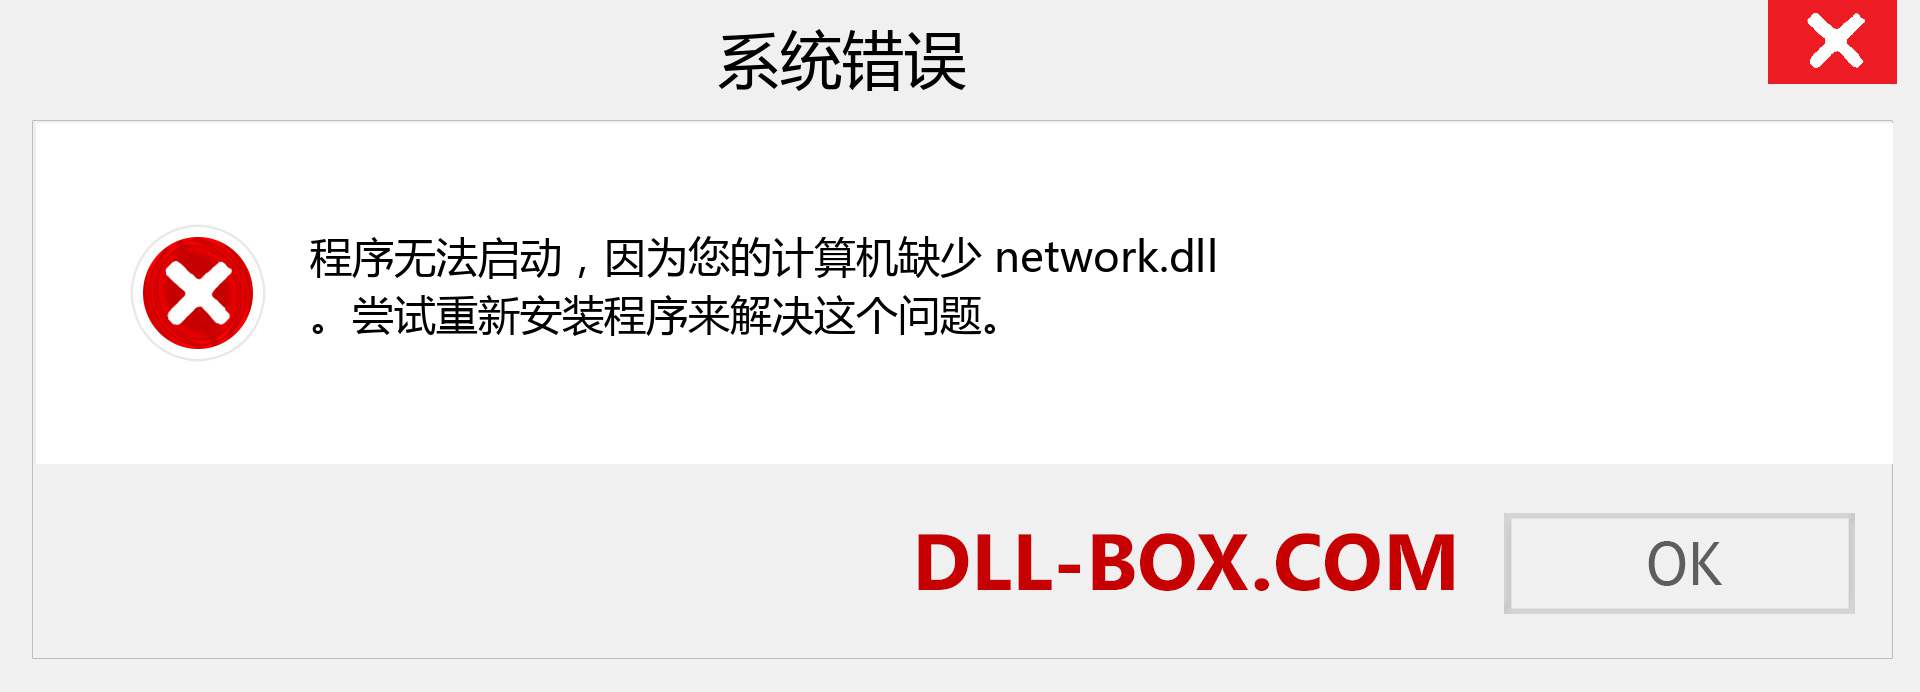 network.dll 文件丢失？。 适用于 Windows 7、8、10 的下载 - 修复 Windows、照片、图像上的 network dll 丢失错误